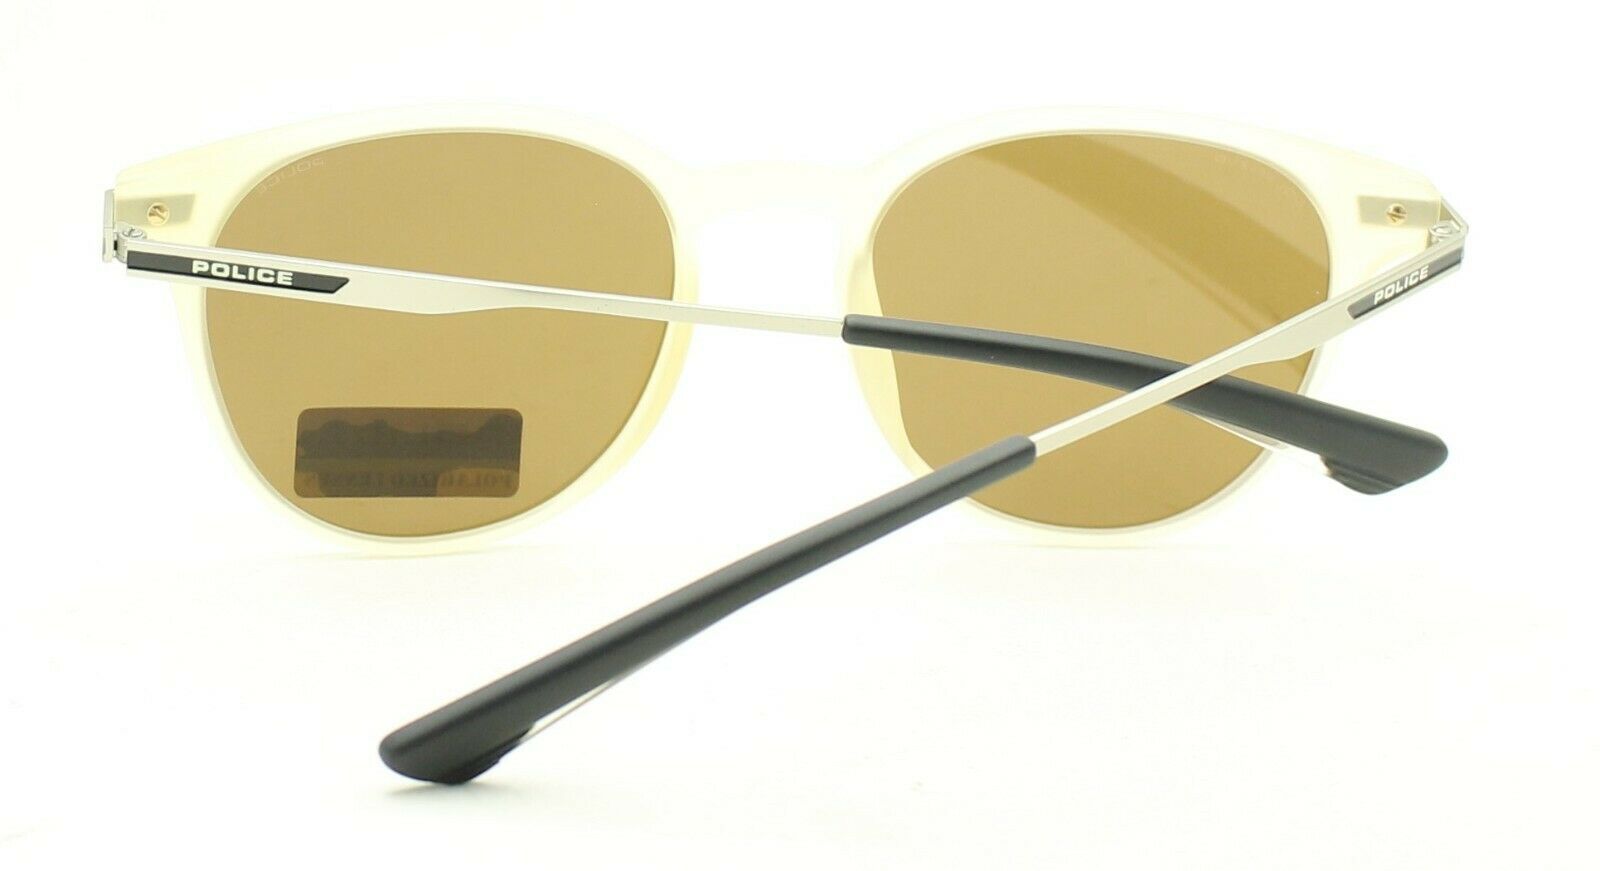 POLICE SPL718 I02G SUMMERTIME 1 52mm Sunglasses Shades Eyewear Frames - New